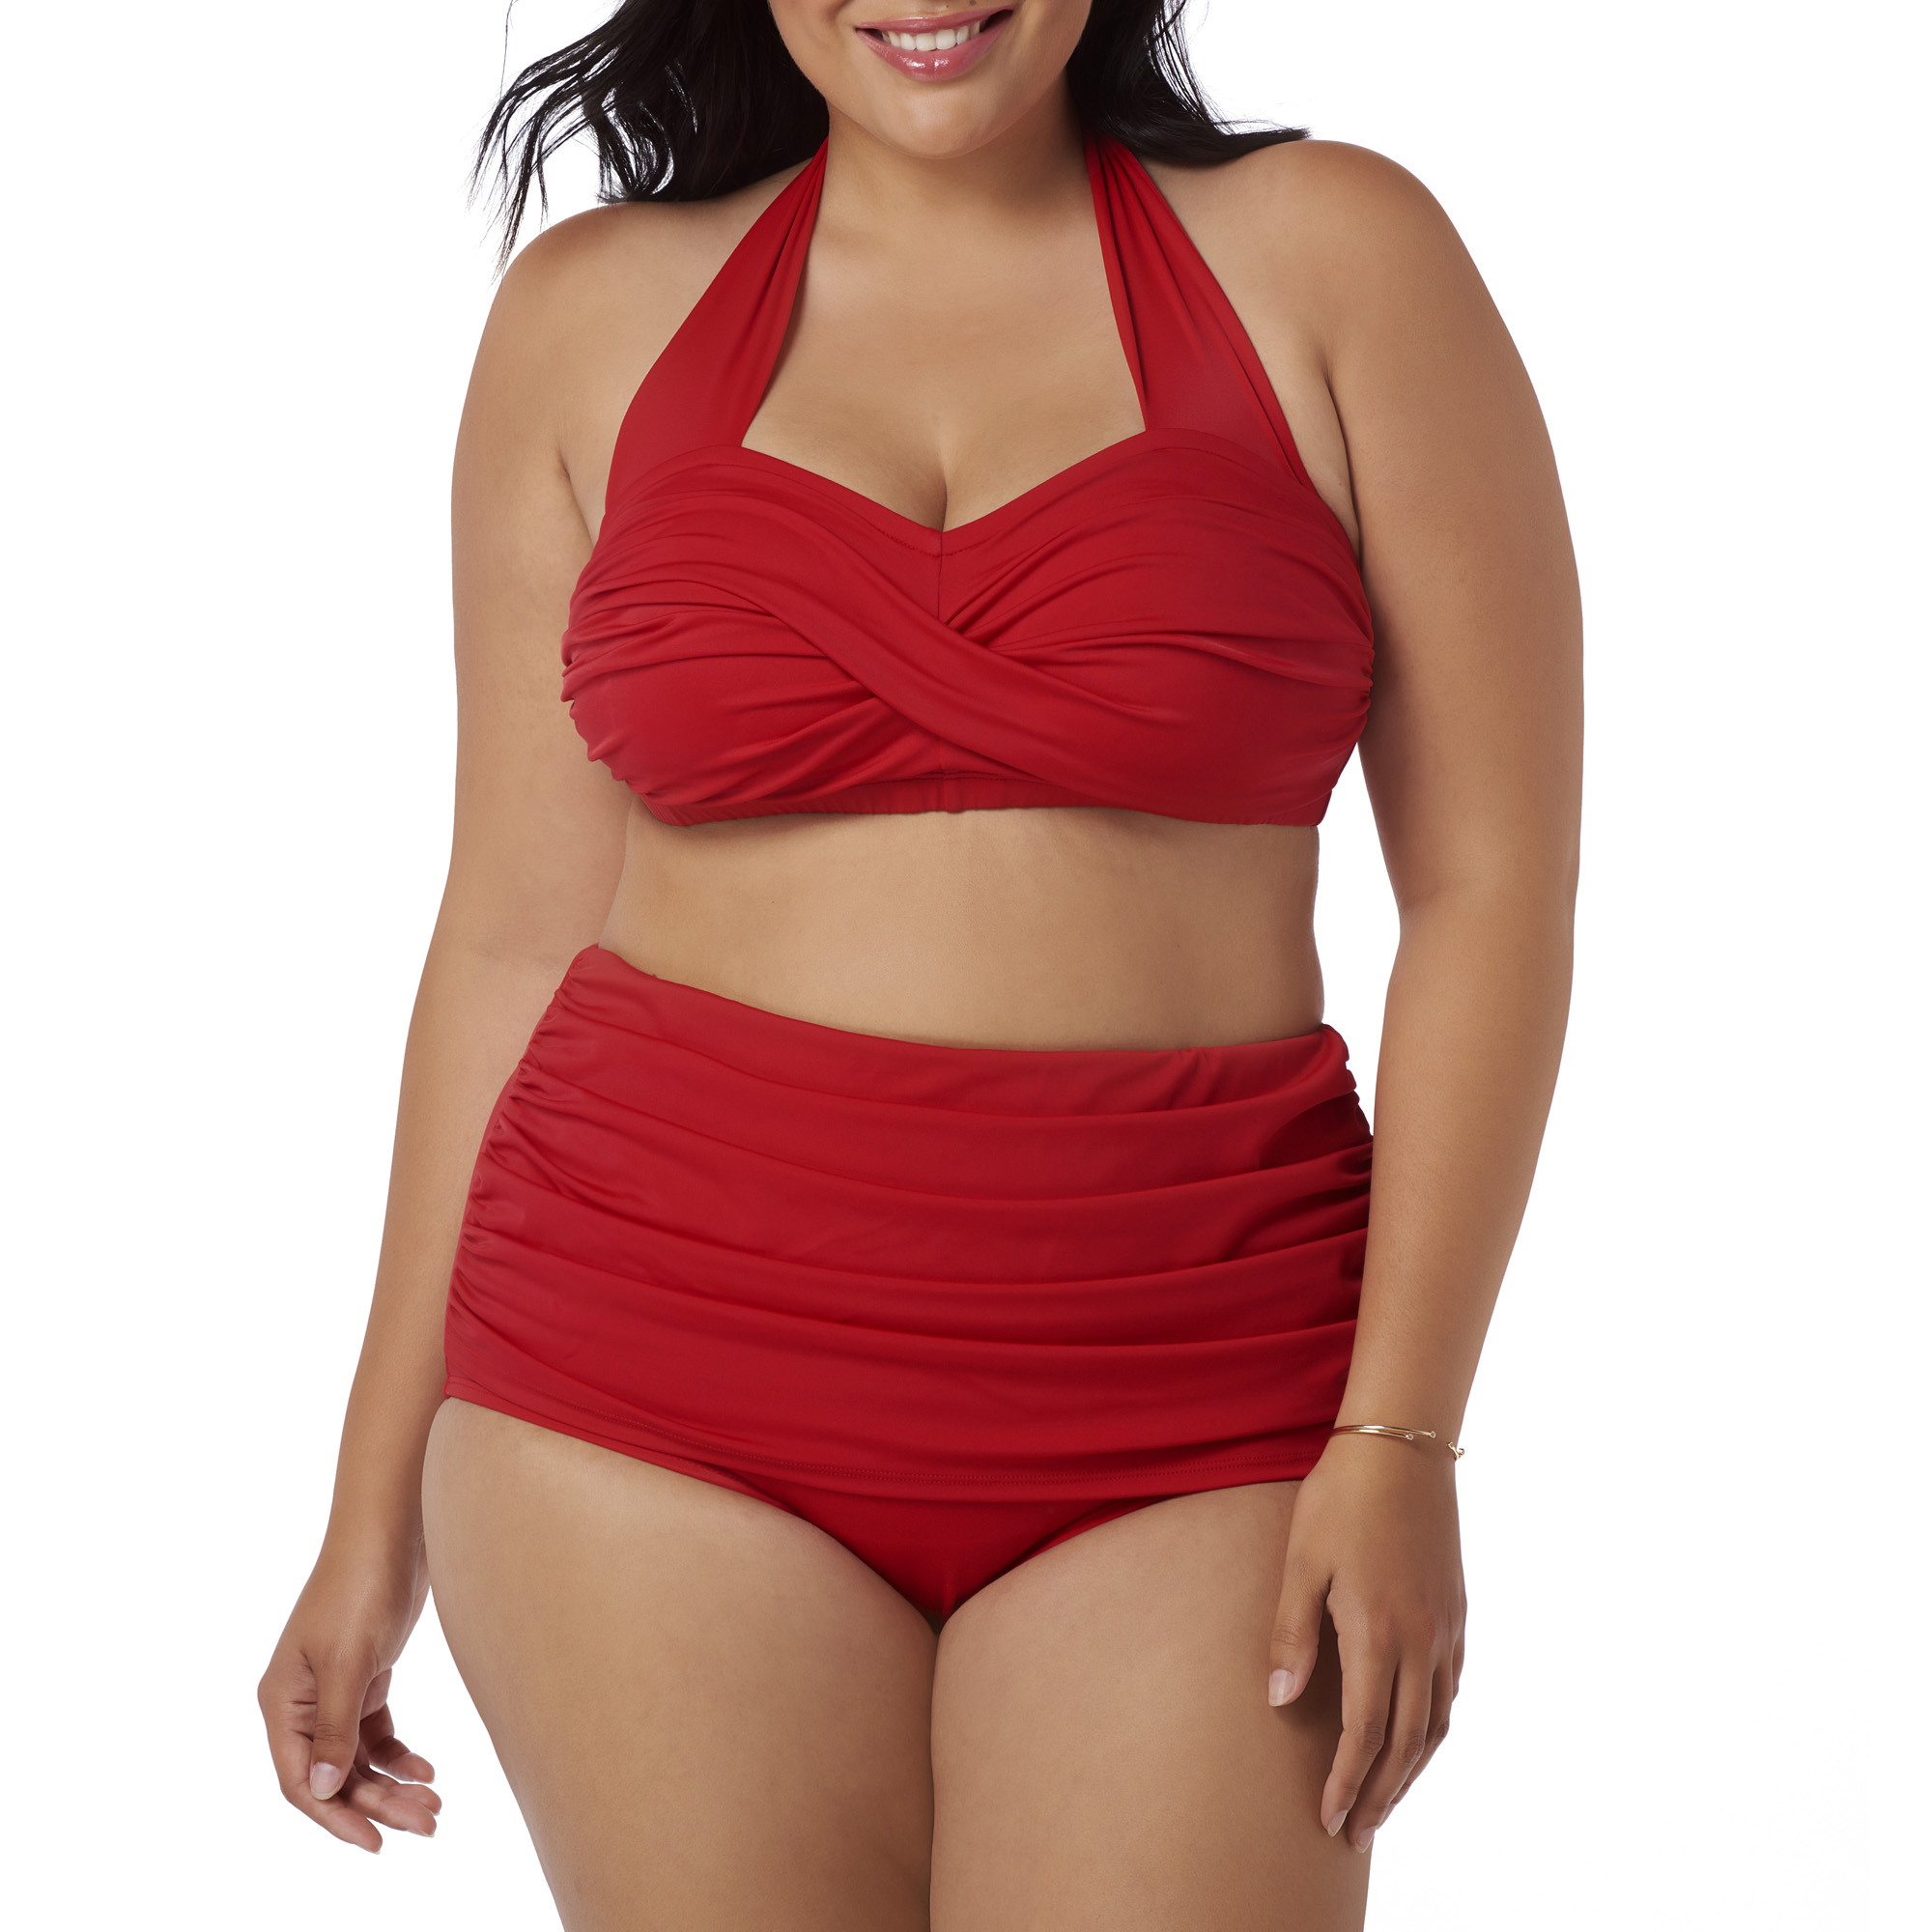 Catalina Women's plus-size slimming high-waisted bikini two-piece swimsuit set - image 1 of 2